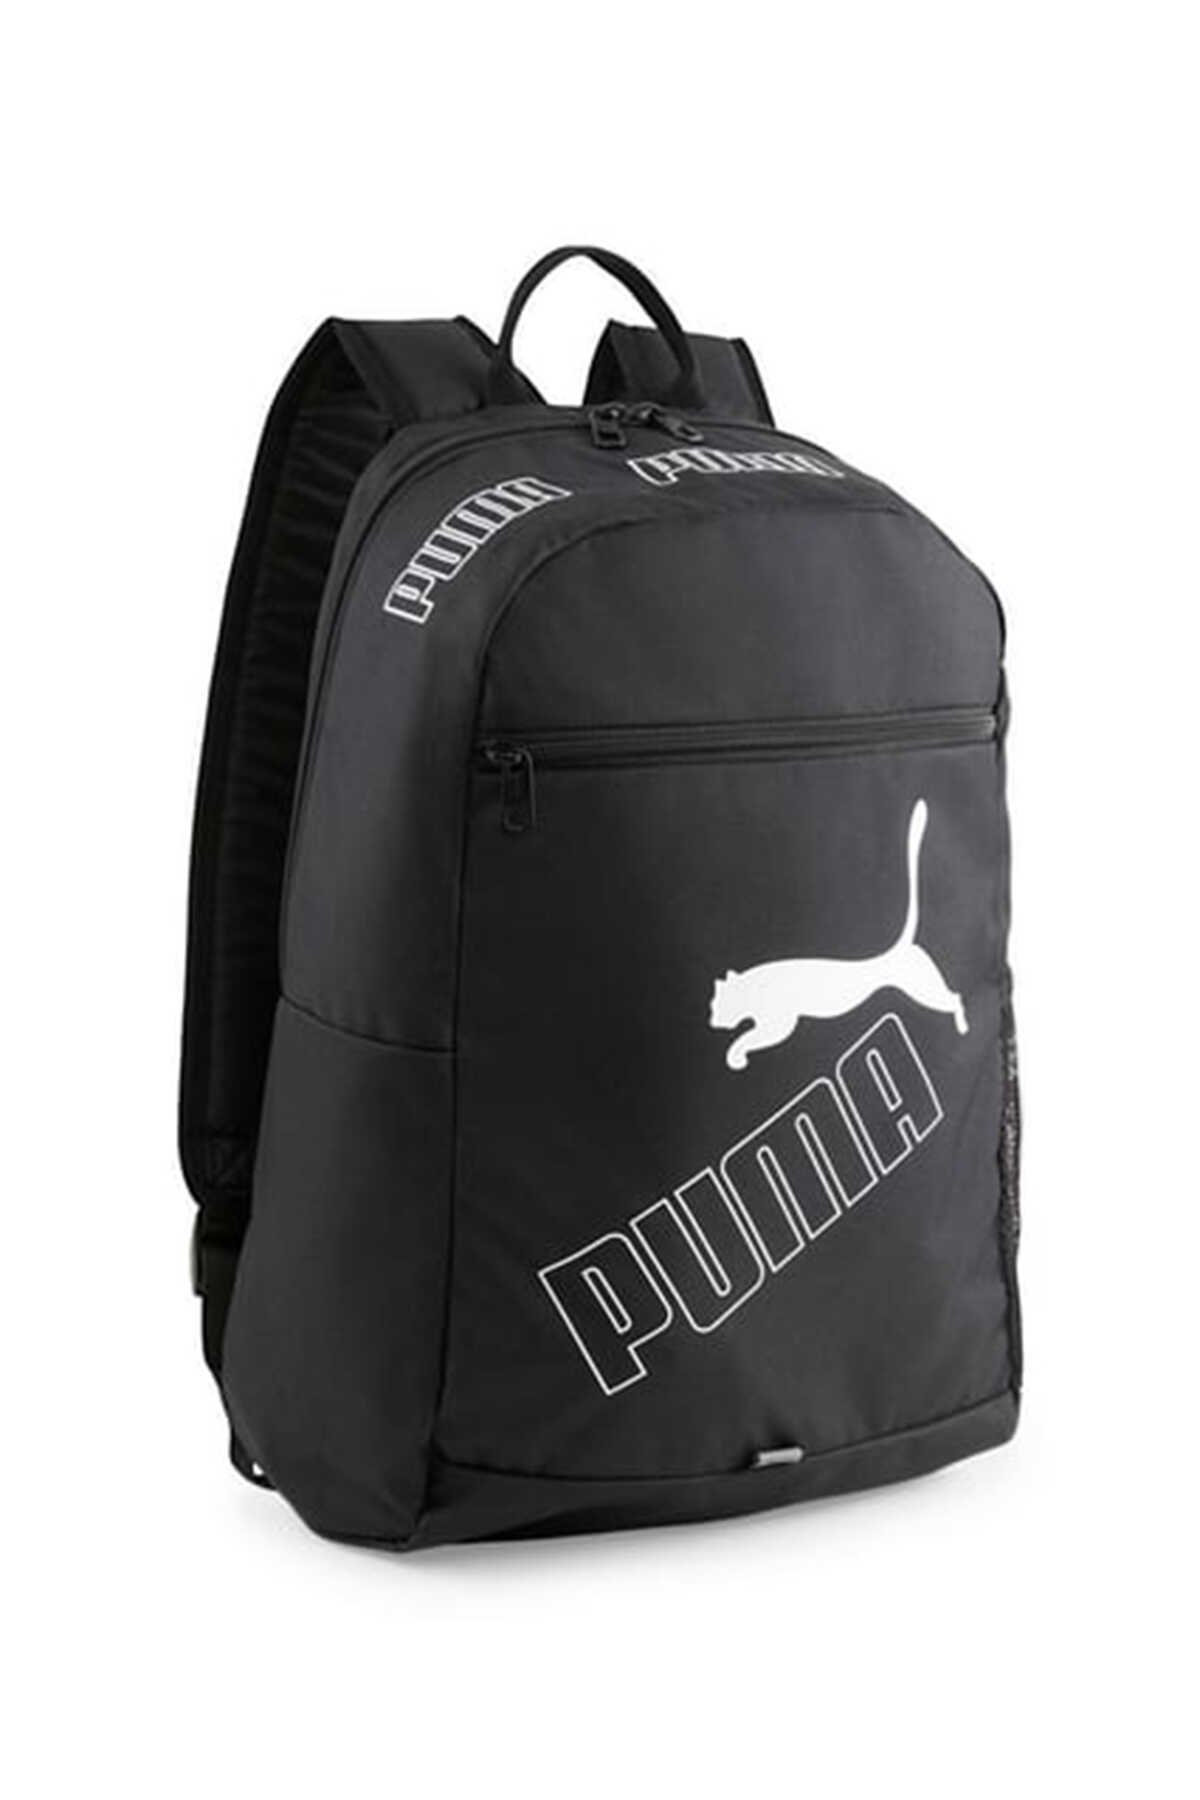 Puma - Puma Phase Backpack II Unisex Sırt Çantası Siyah